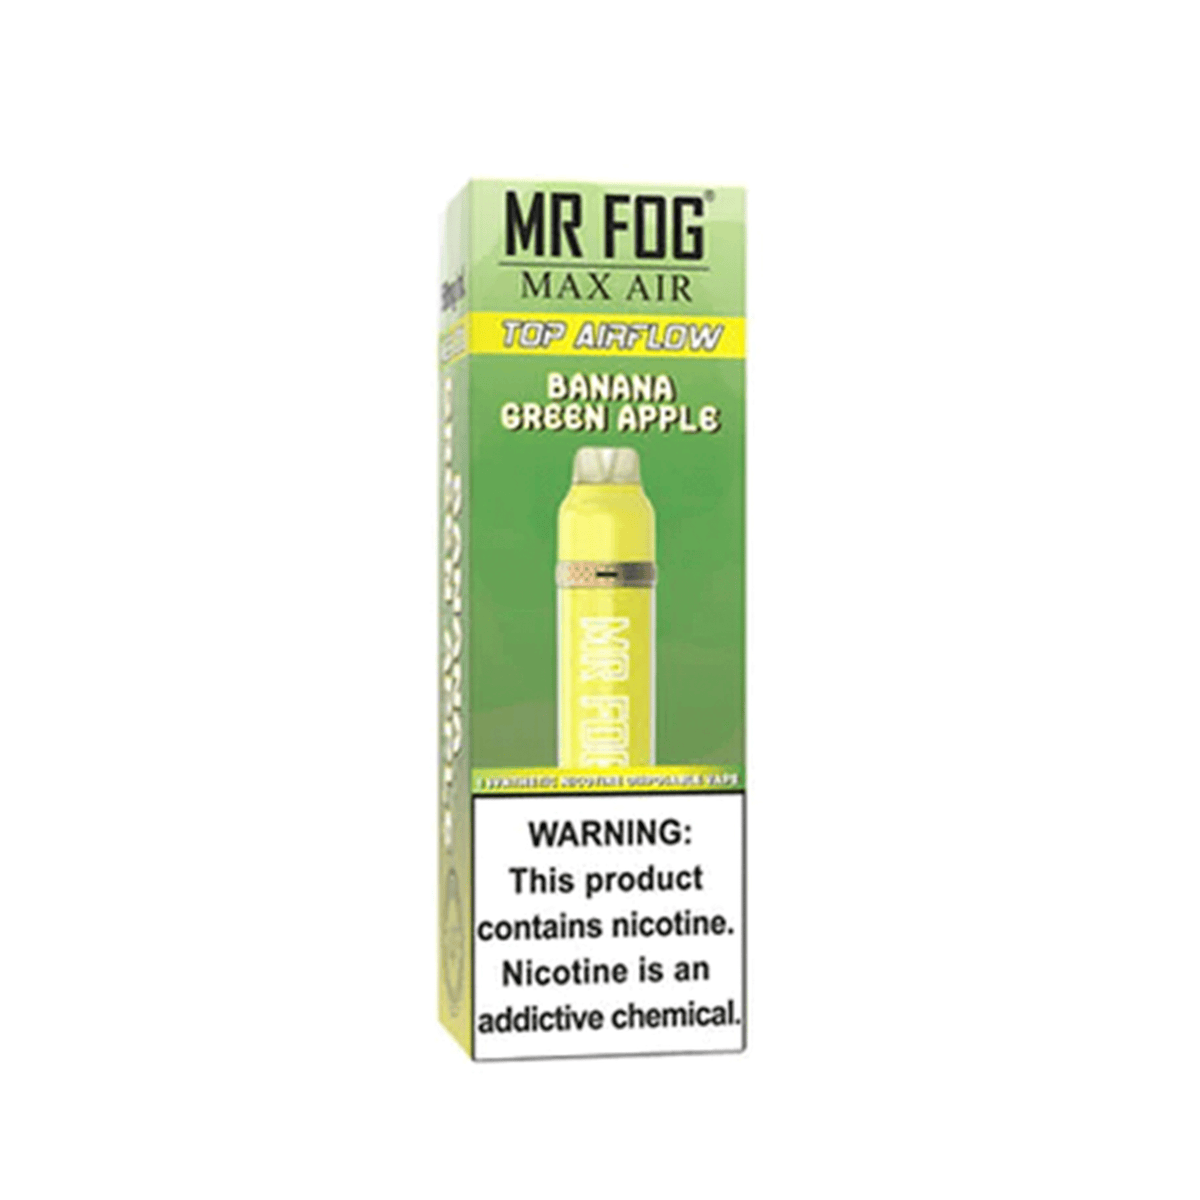 Mr. Fog Max Air Disposable Vape - Banana Green Apple available on Canada online vape shop